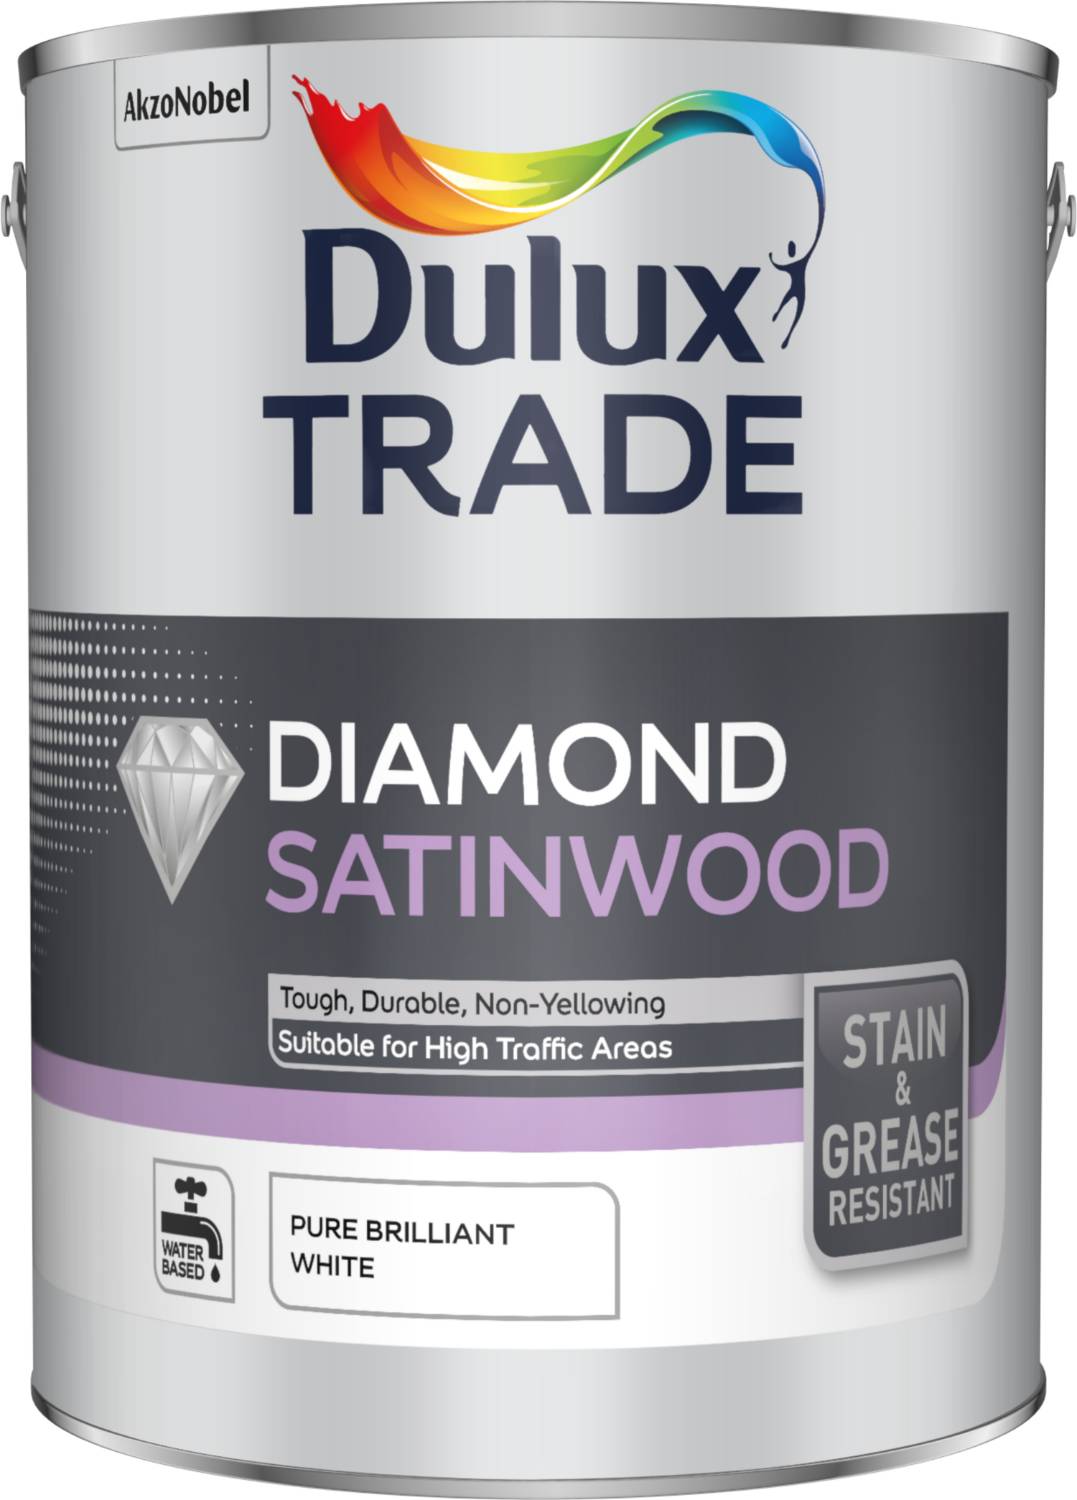 Dulux Trade Diamond Satinwood